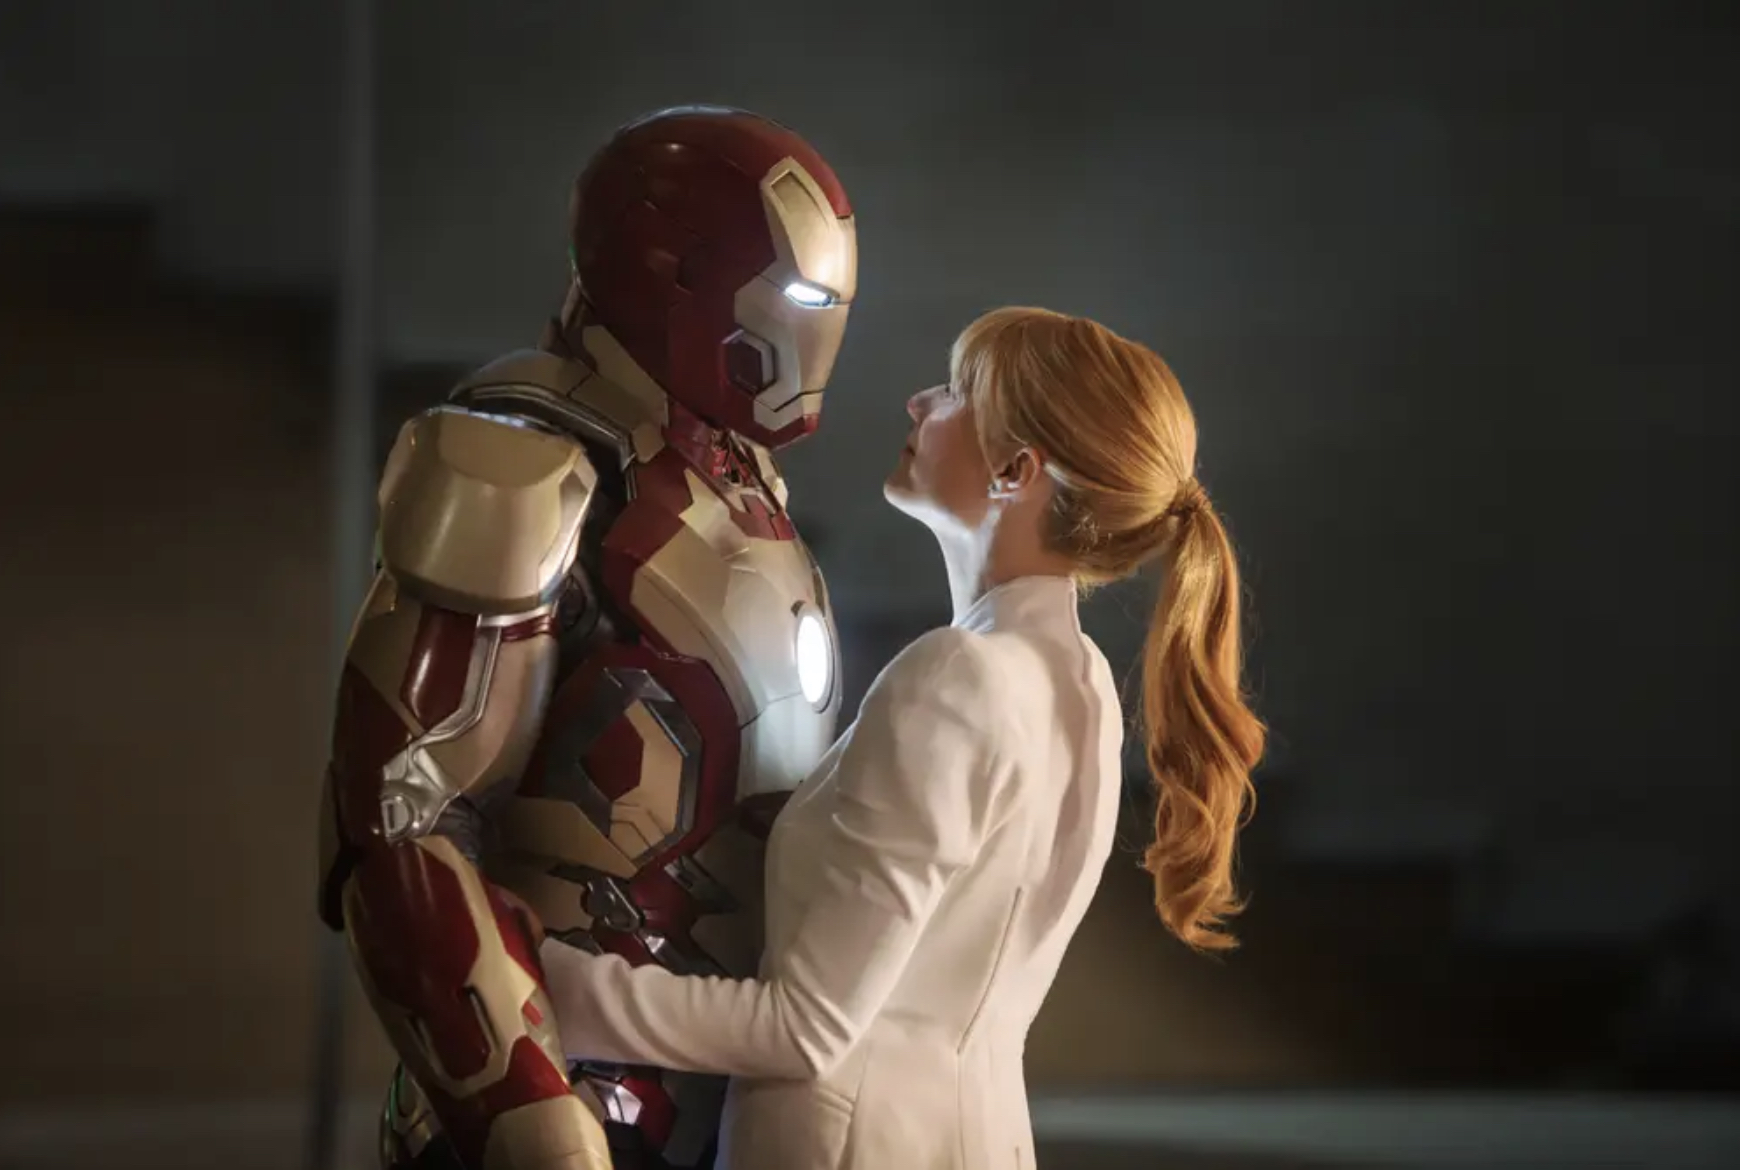 Iron Man and Pepper Potts embrace